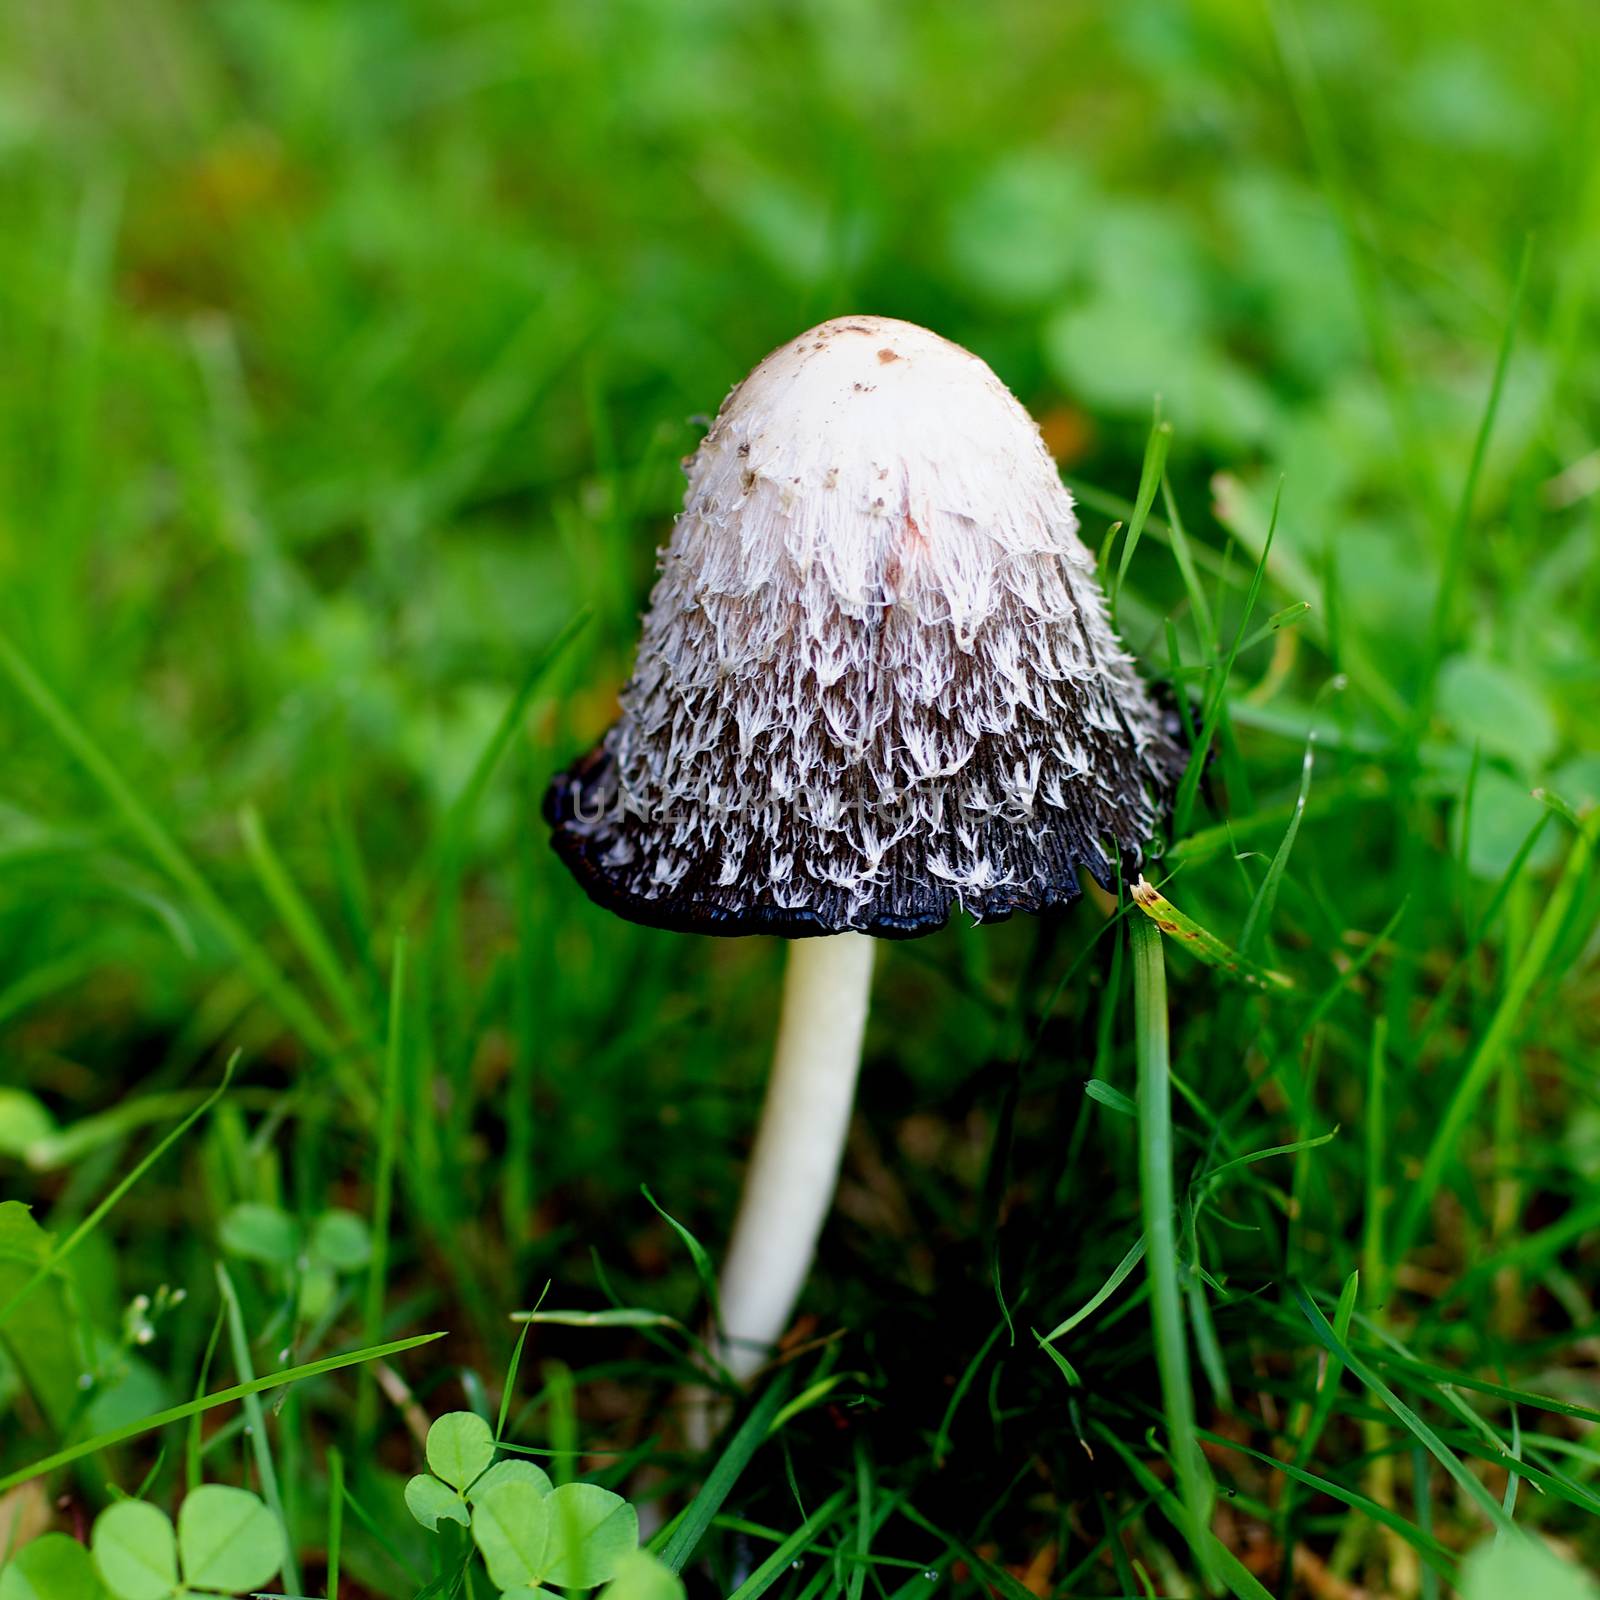 Black and White Non-edible Mushroom by zhekos